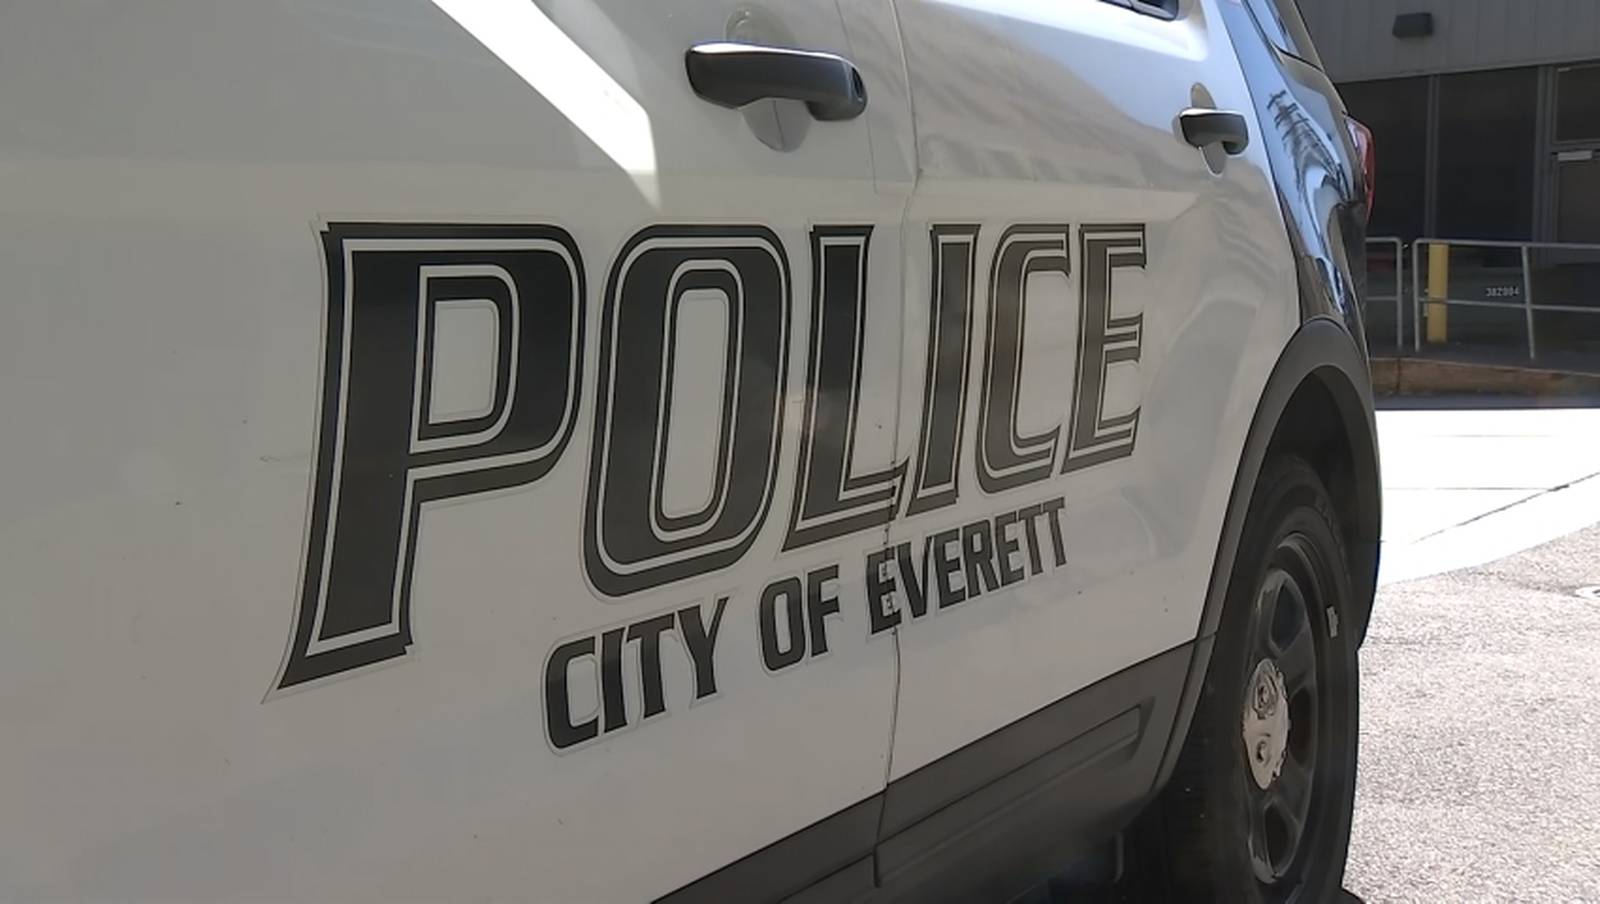 Suspect arrested in cold case murder of Everett man – KIRO 7 News Seattle